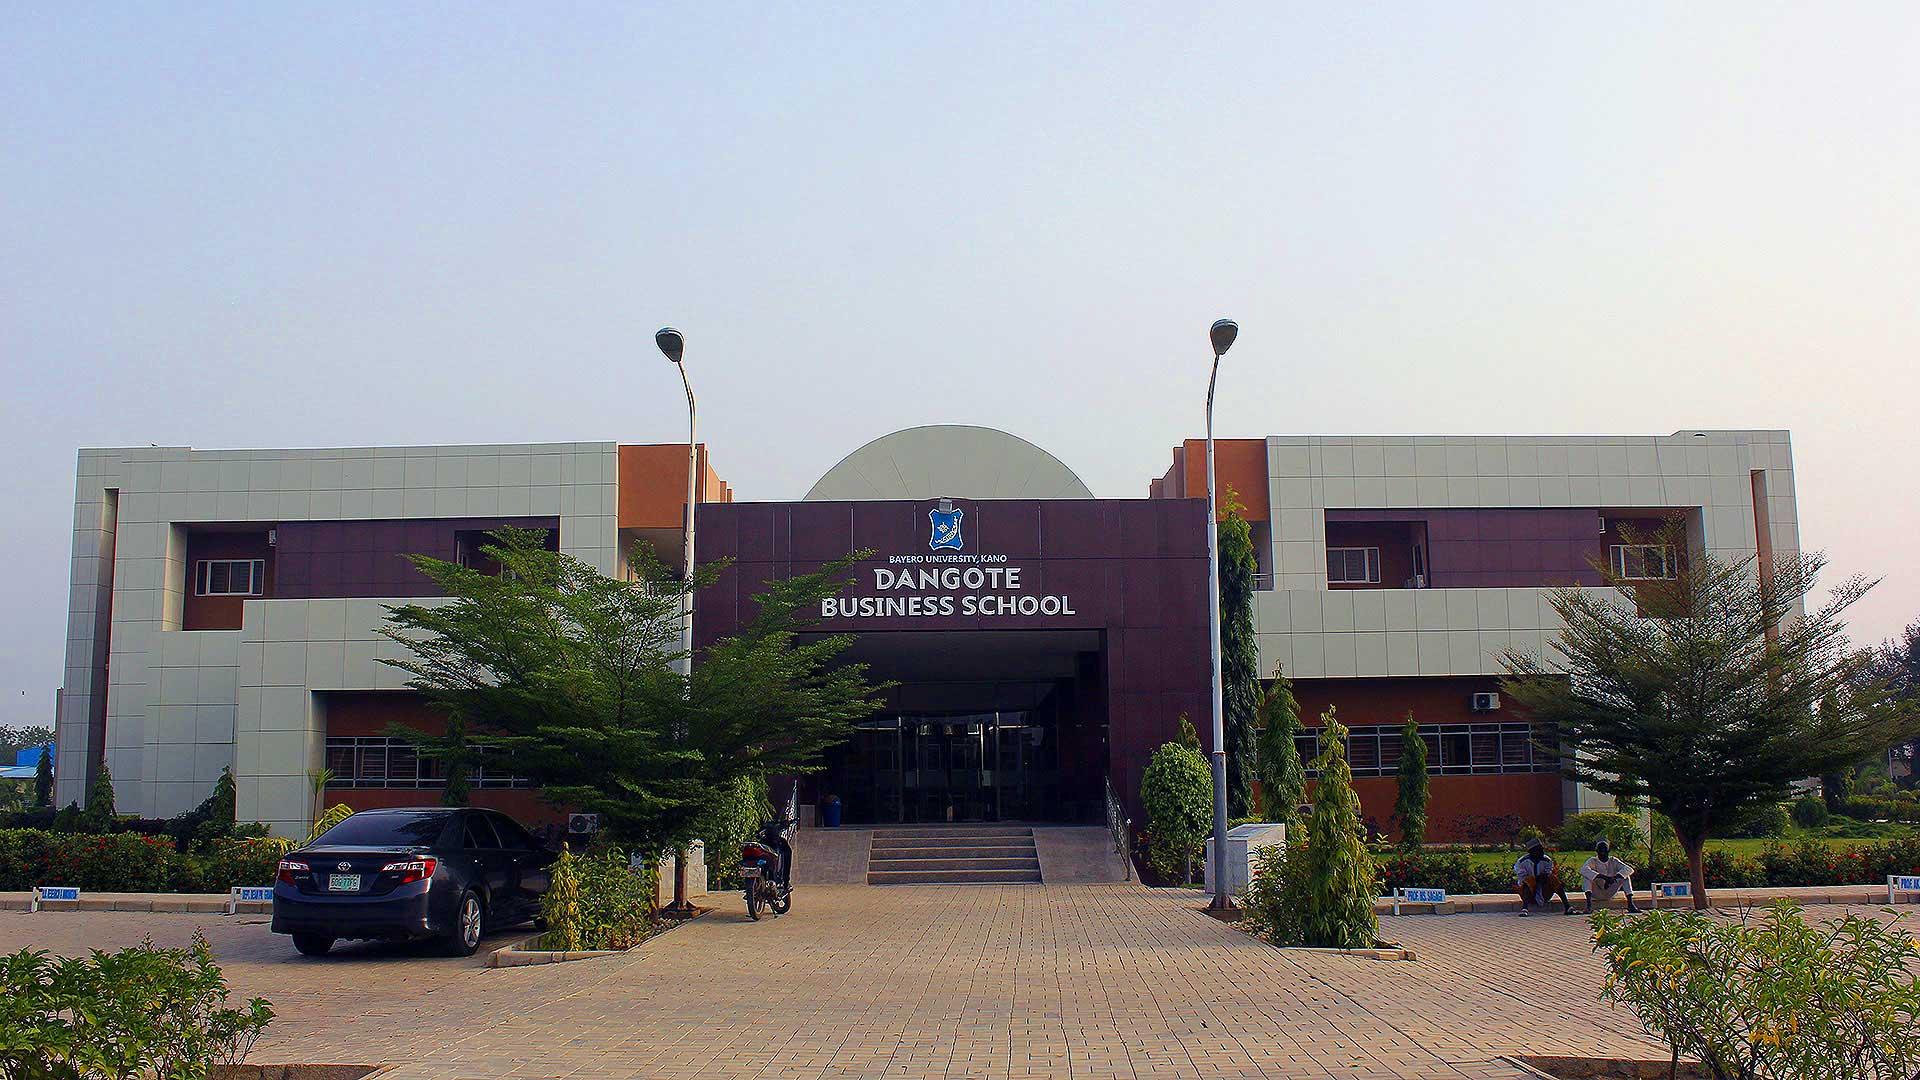 Dangote Business School